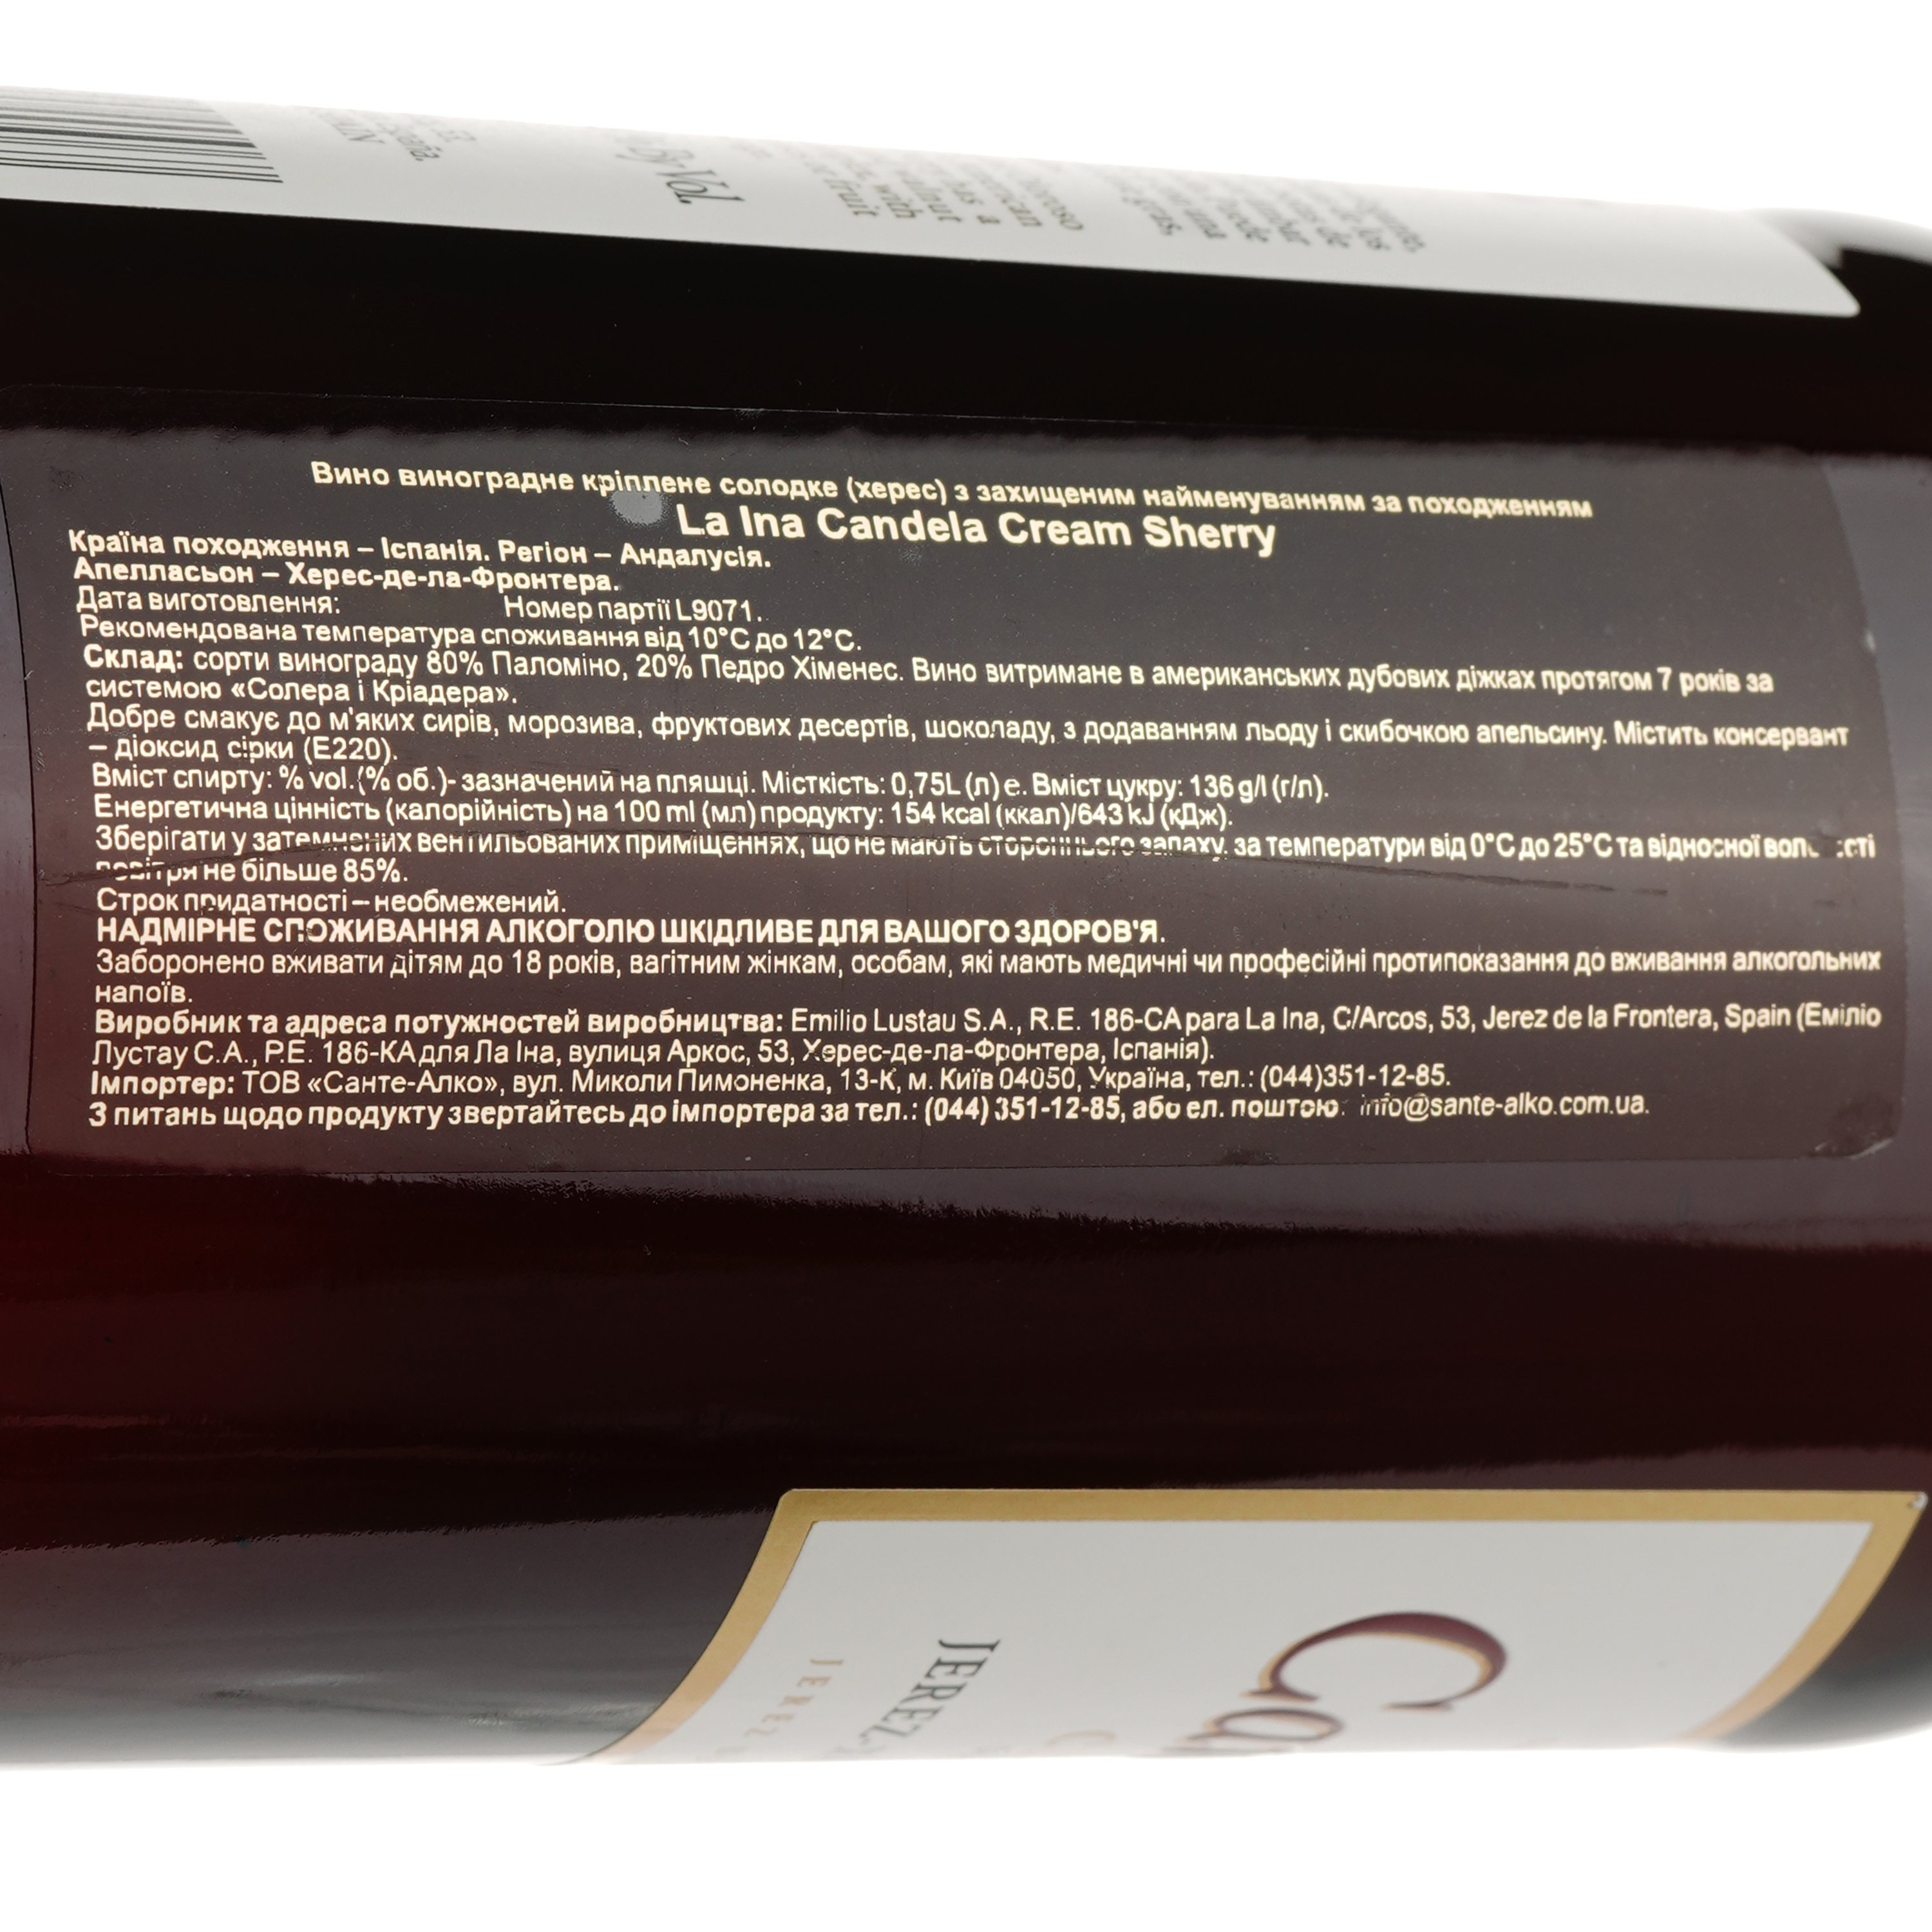 Вино La Ina херес Cream Sherry Candela, белое, сладкое, 18%, 0,75 л - фото 3